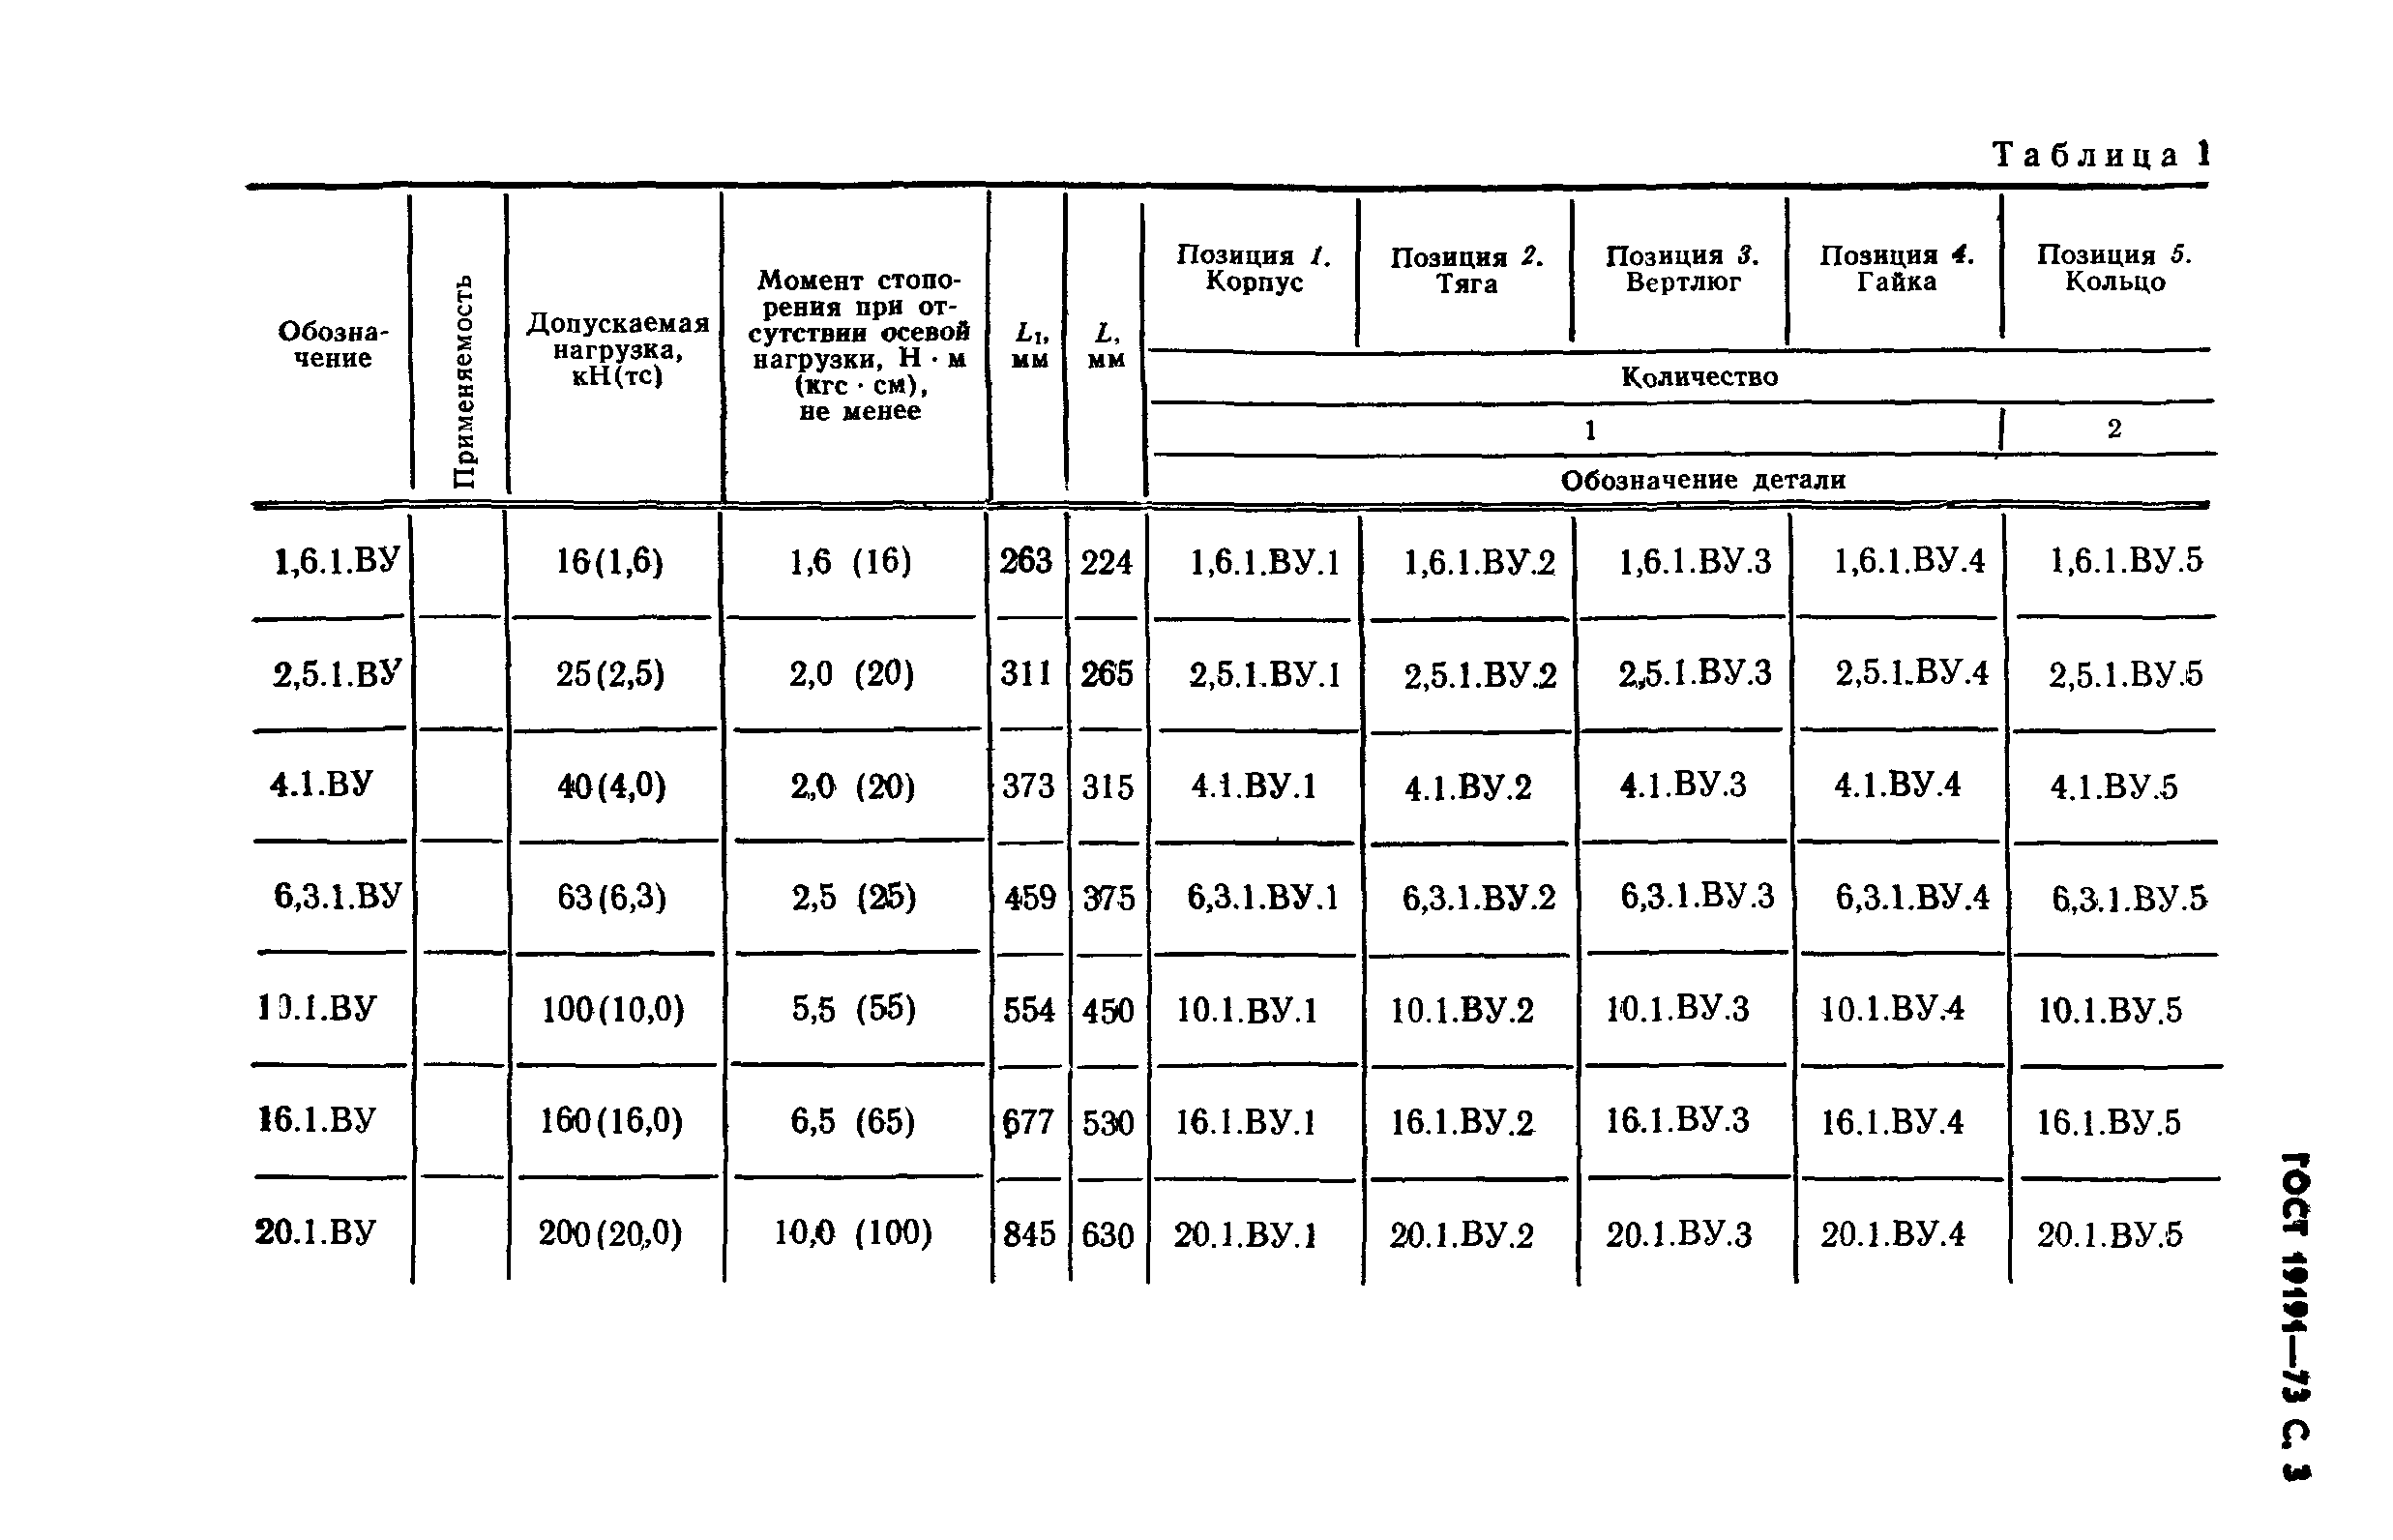 ГОСТ 19191-73